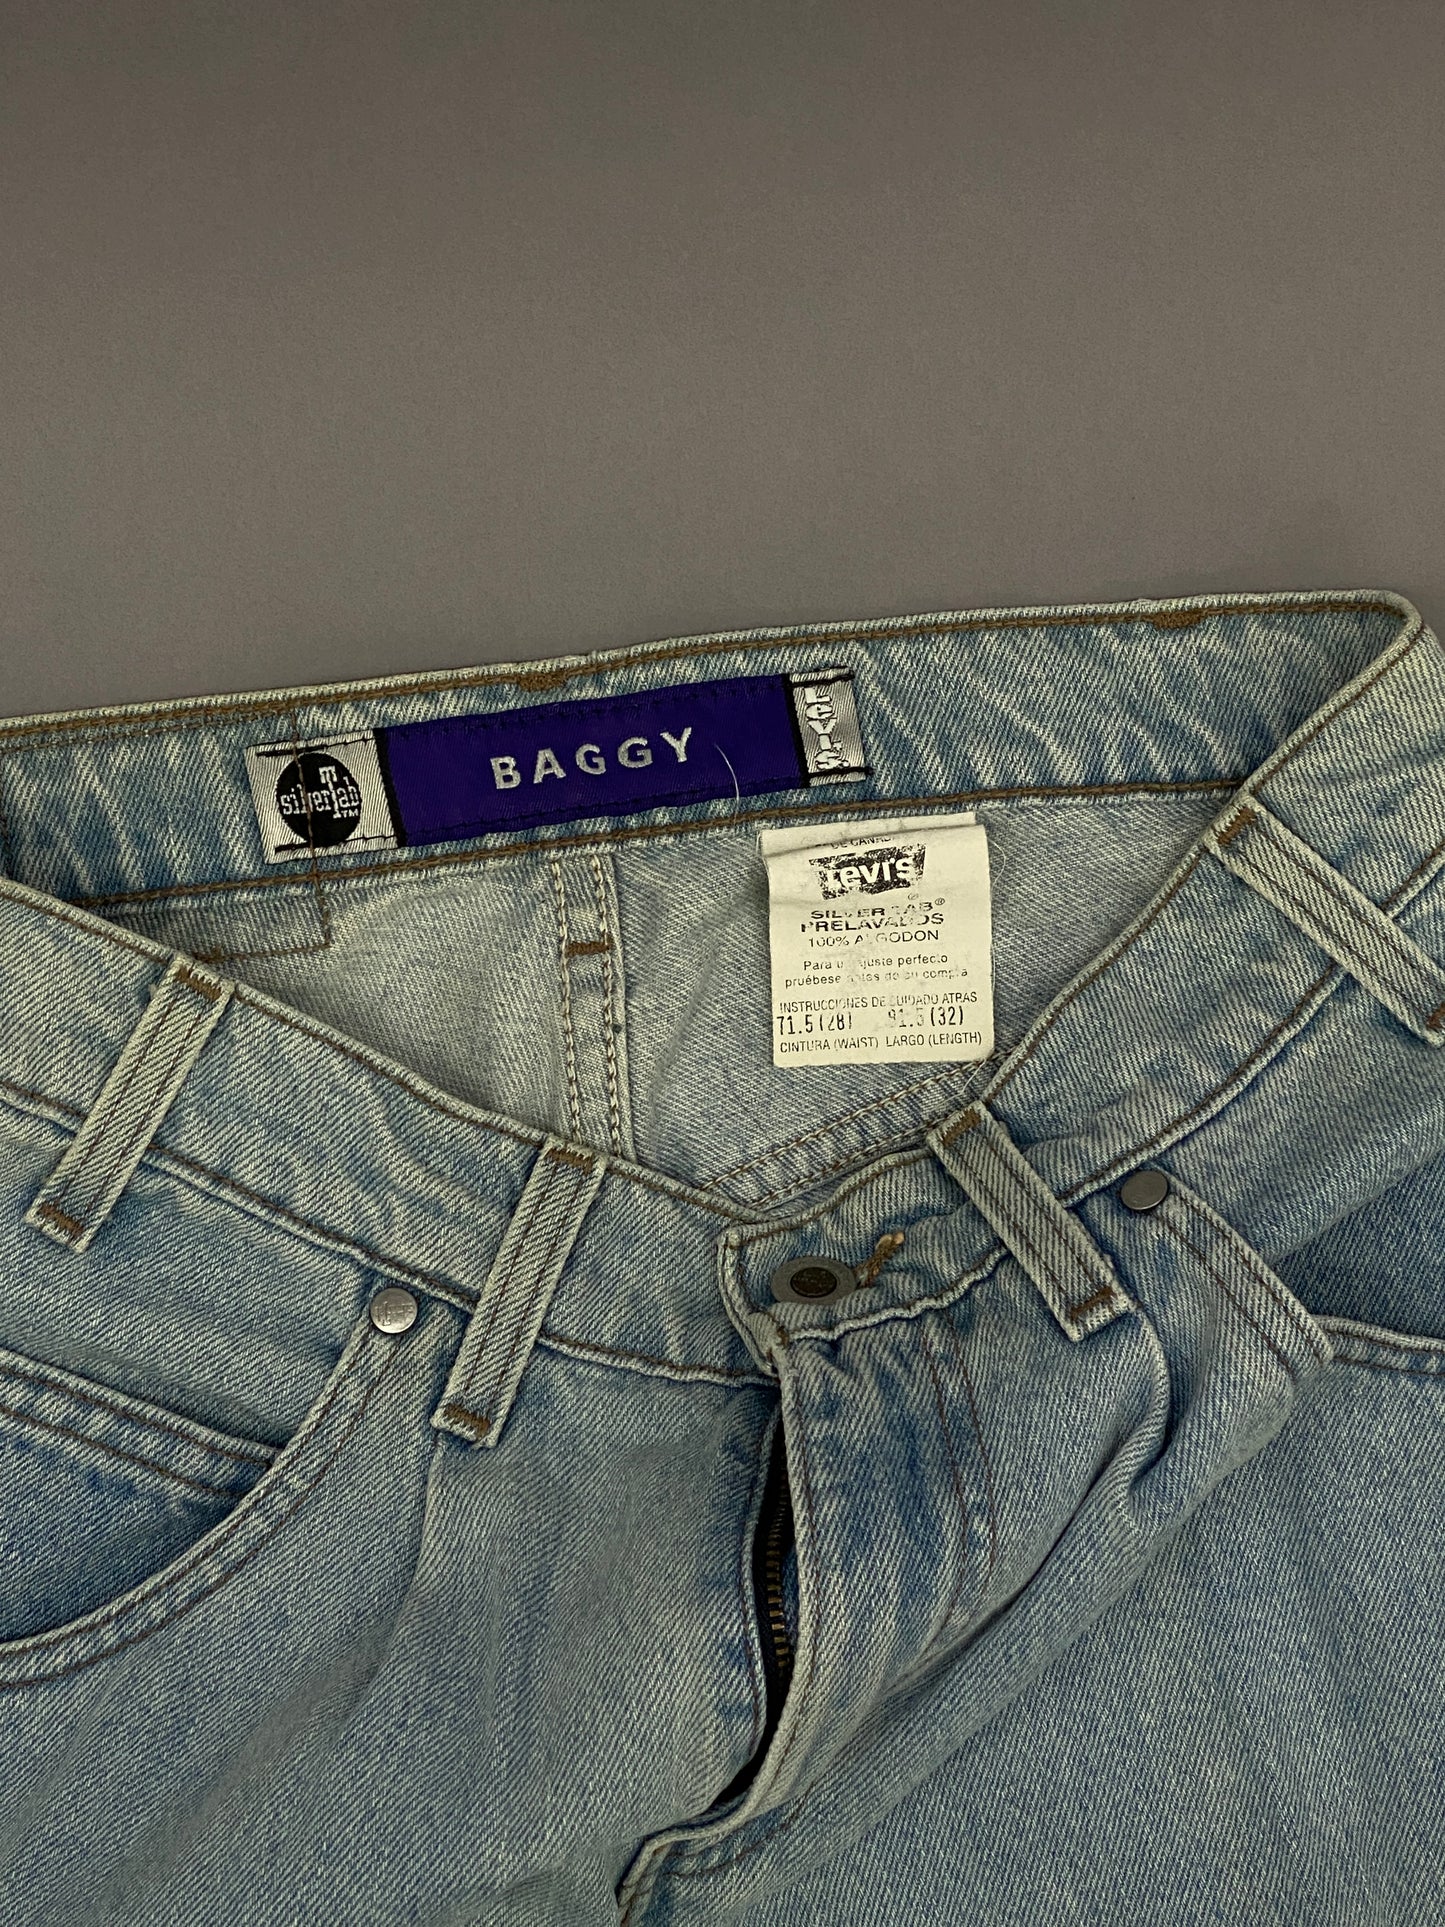 Levis Silvertab Vintage Baggy Jeans - 28x32